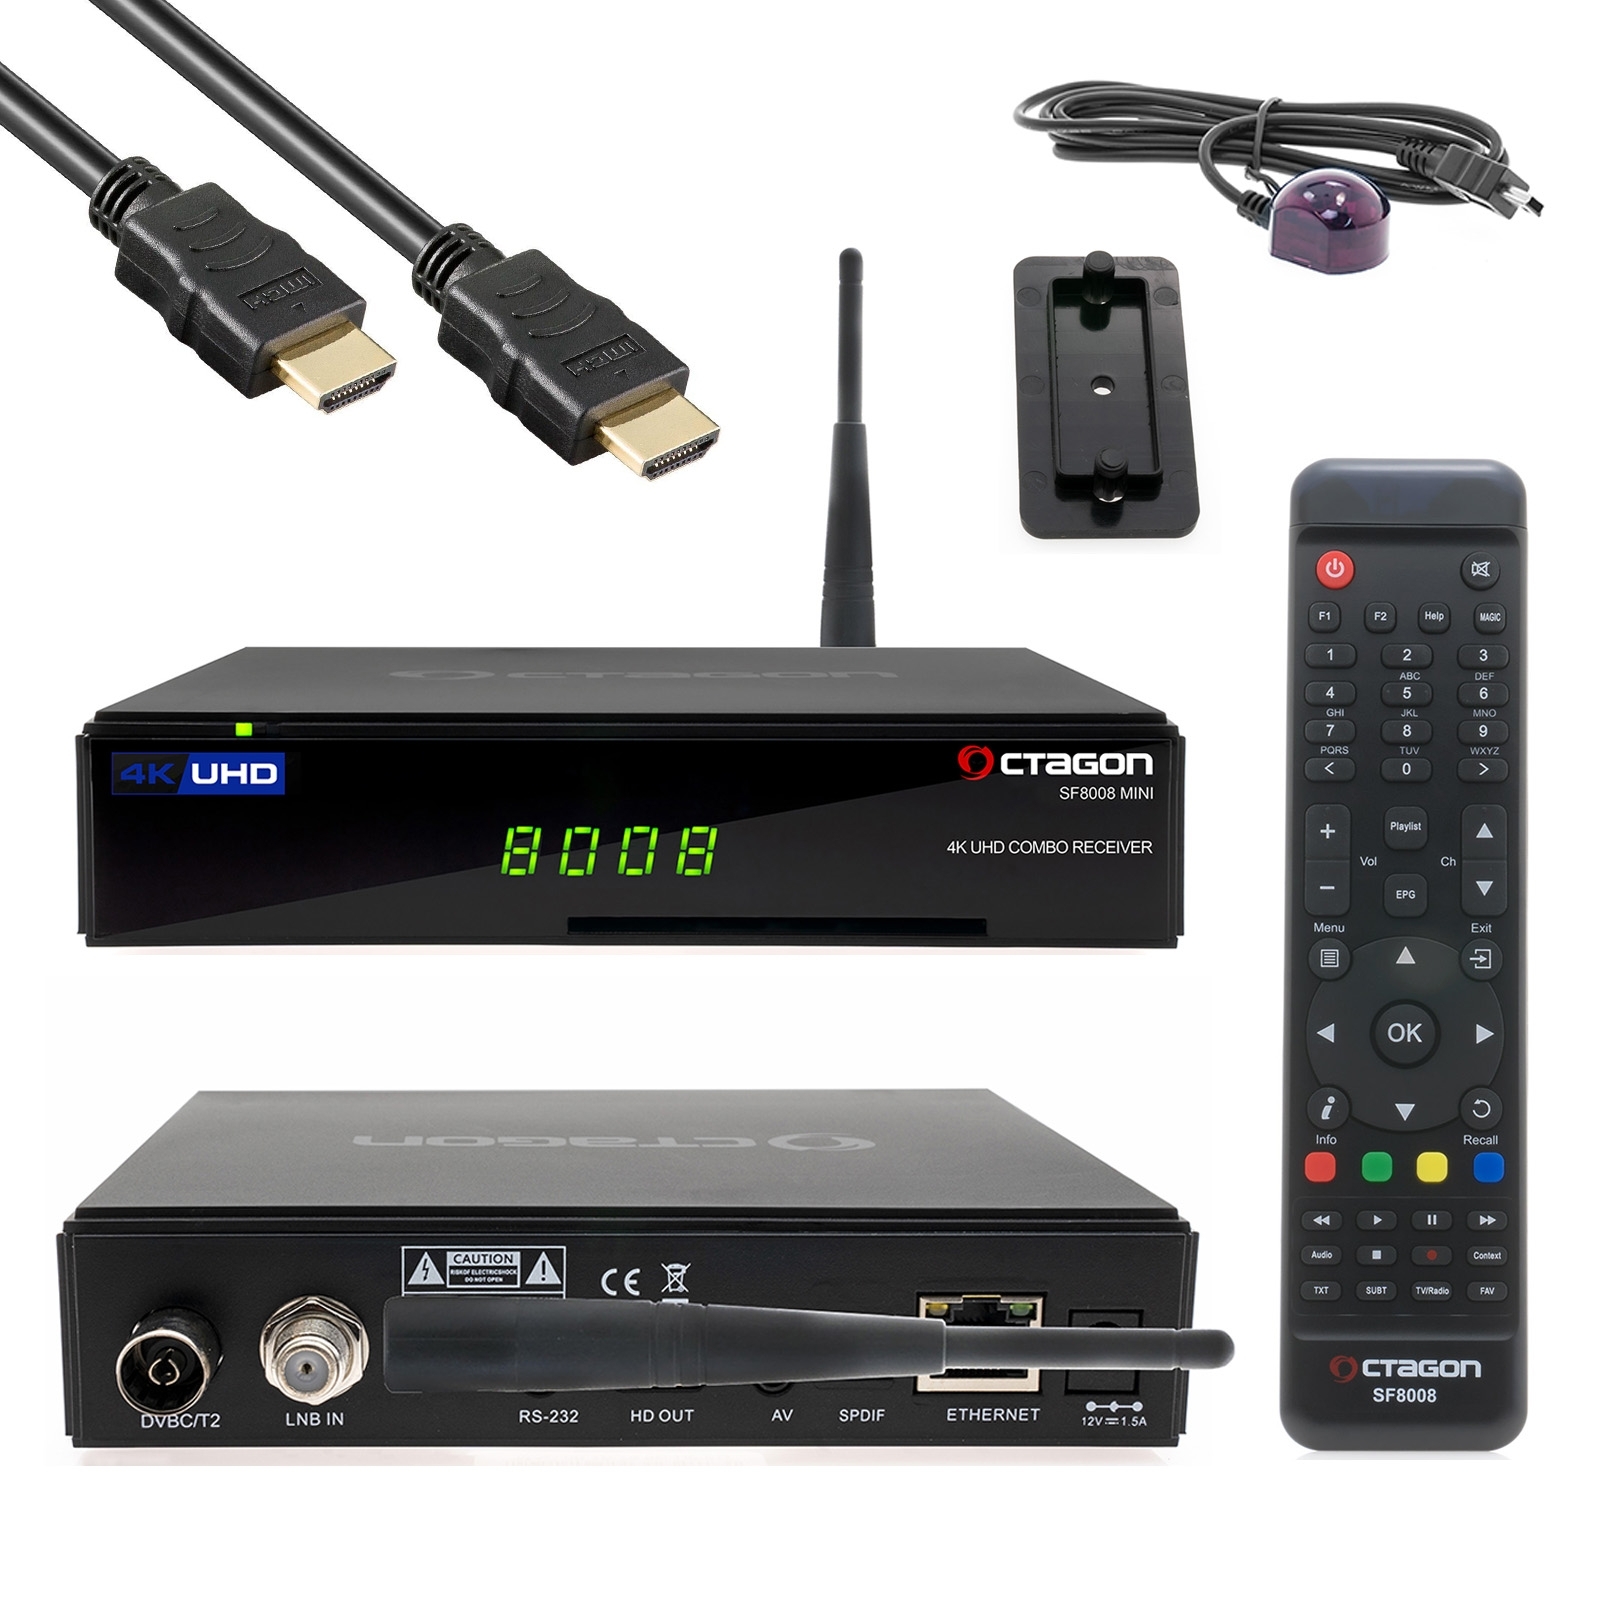 OCTAGON SF8008 MINI 4K ULTRA HD E2 2160P H.265 E2 Linux Wifi 1XDVB-S2X, 1XDVB-C/T2 Comb Receiver